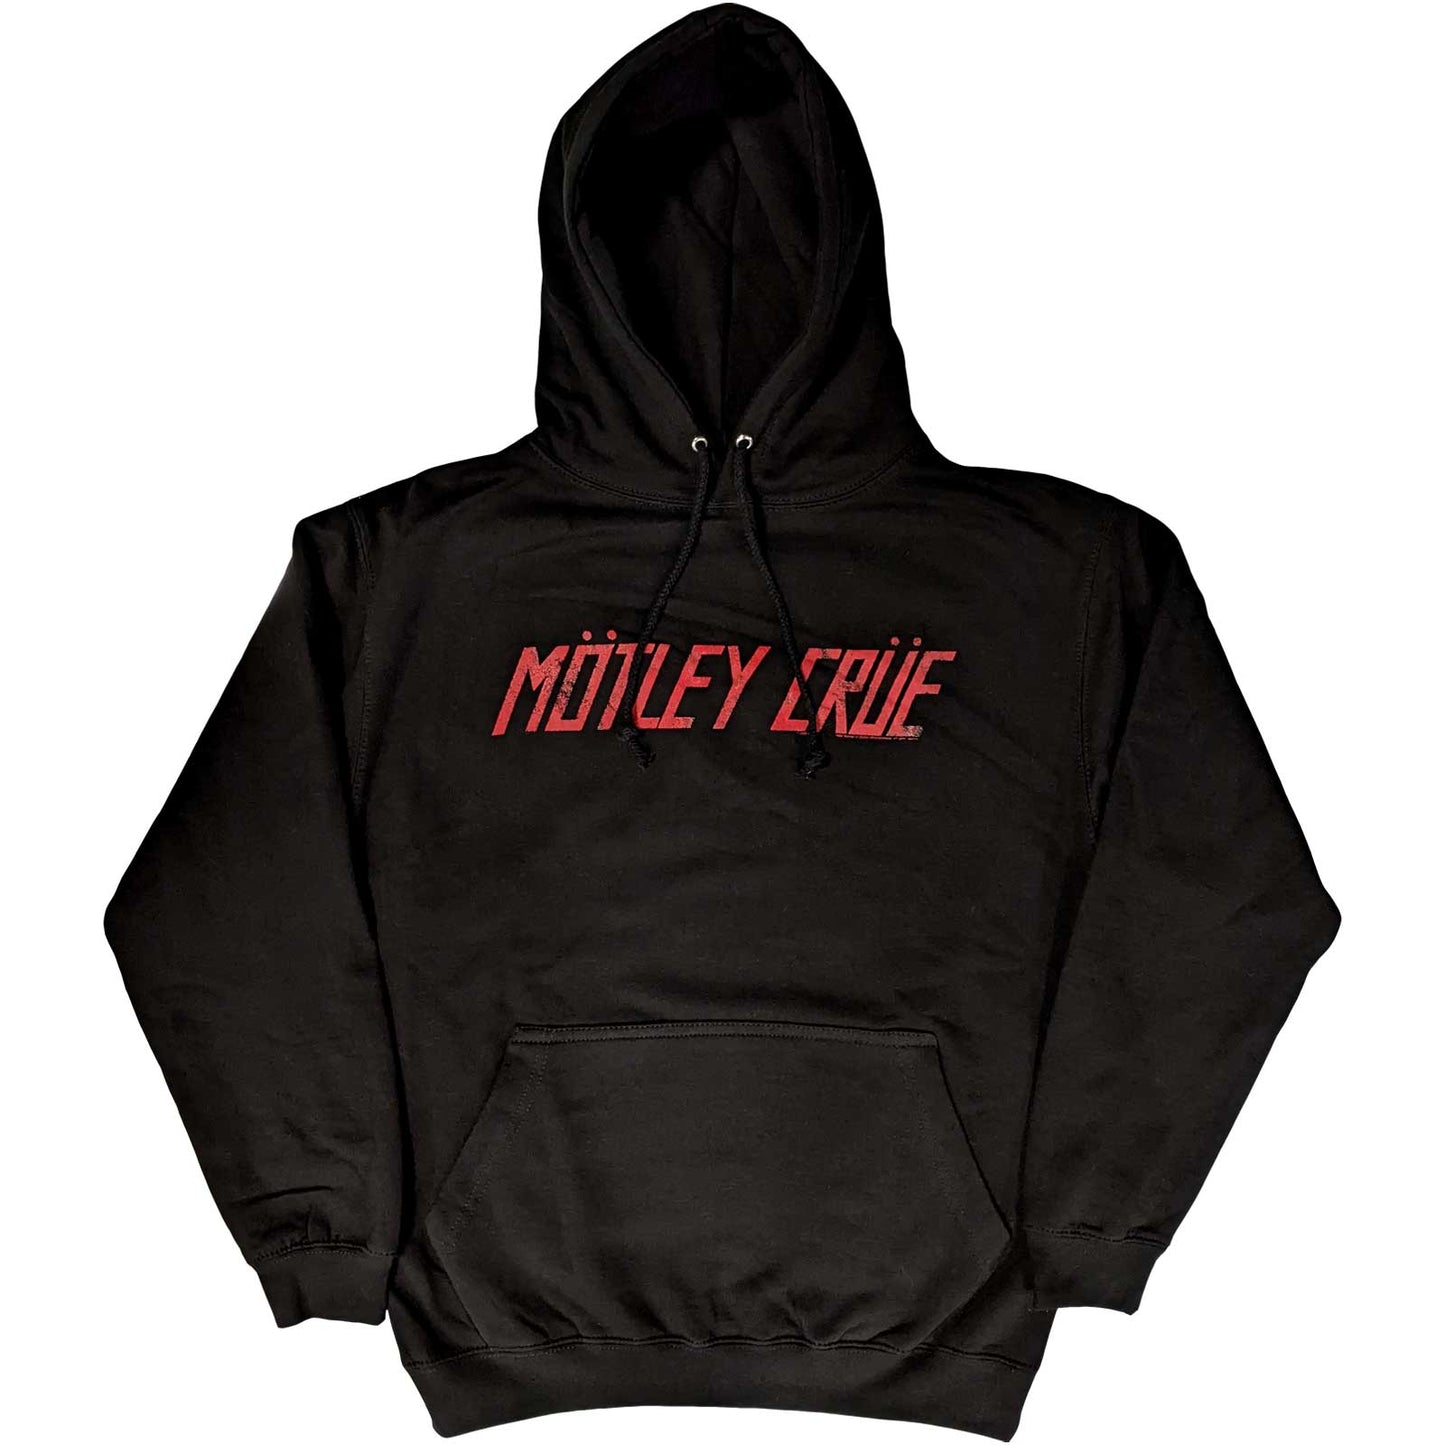 Motley Crue Pullover Hoodie: Distressed Logo